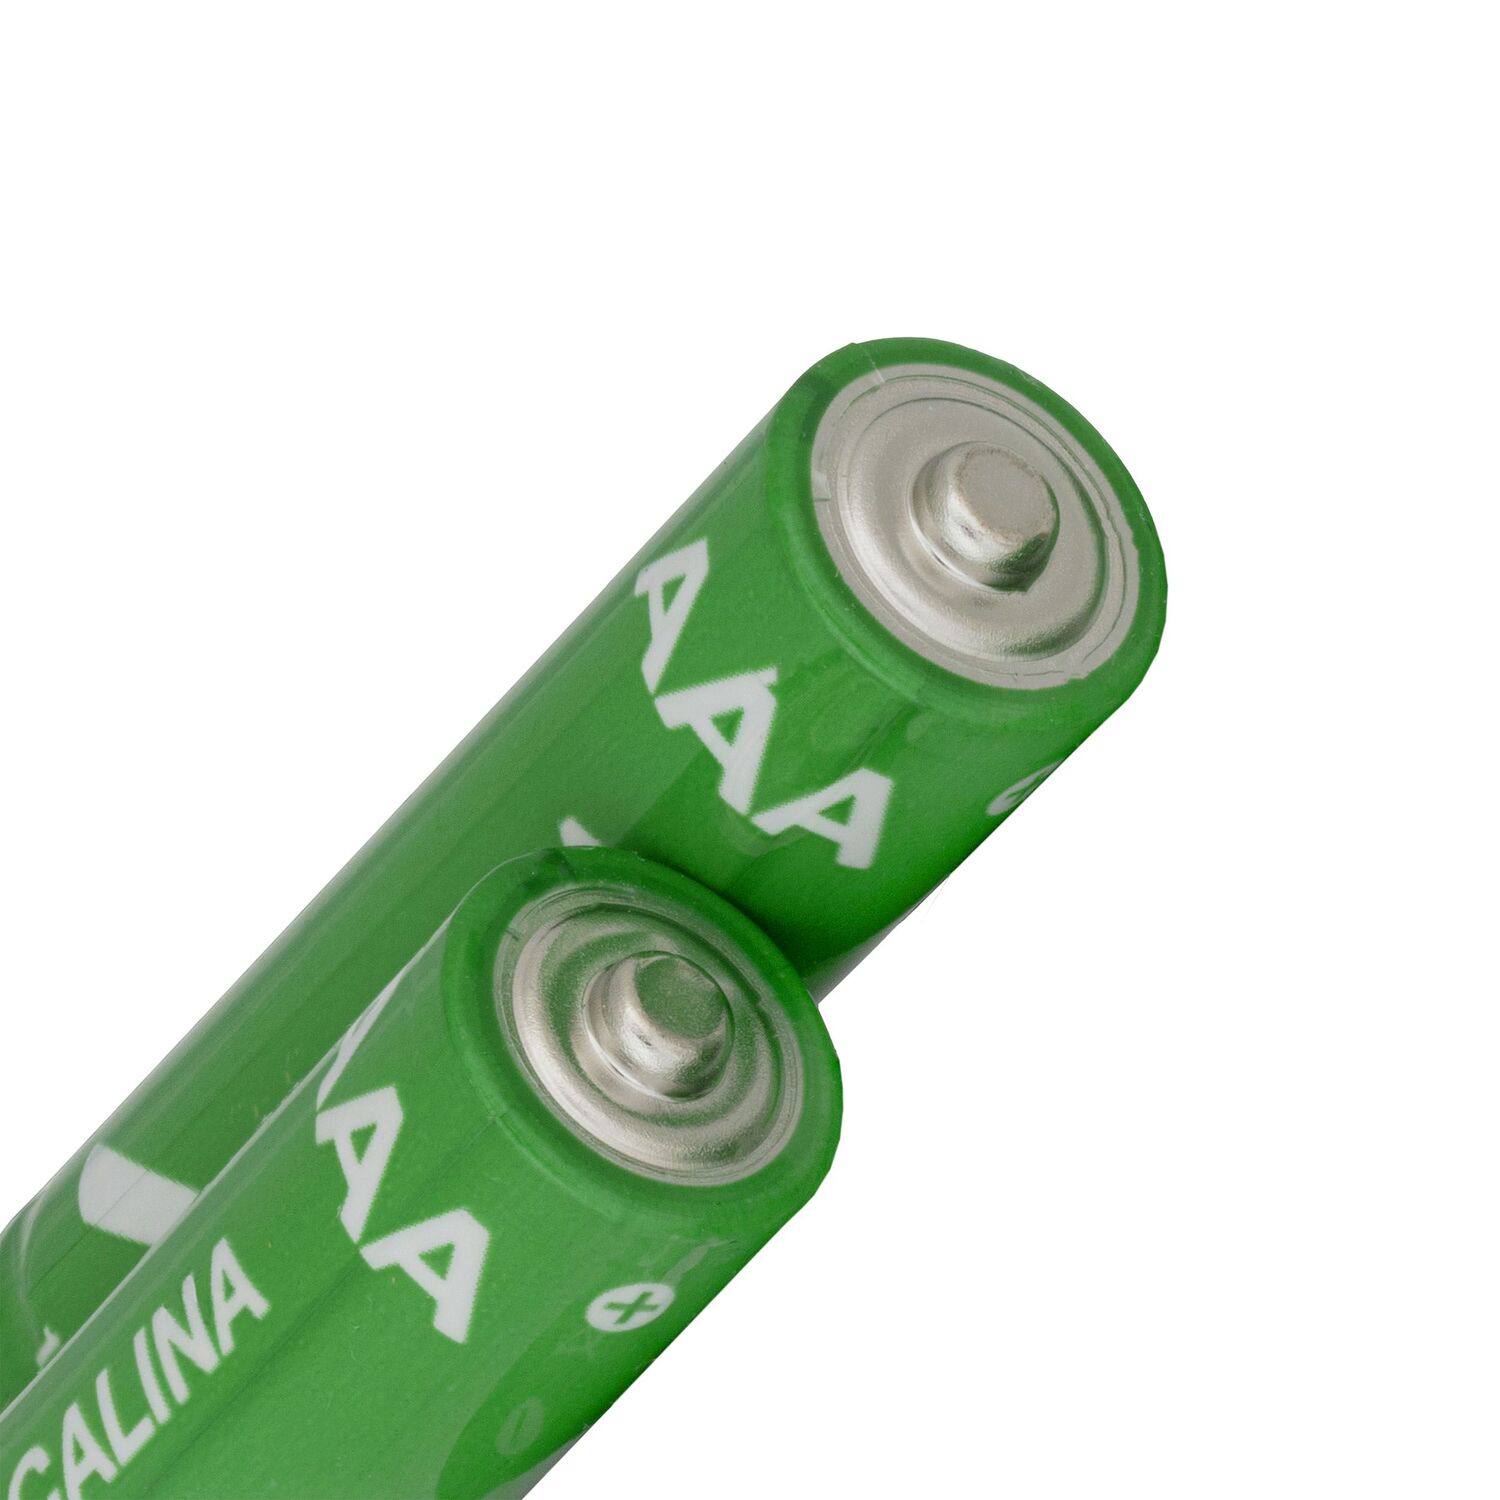 Mitzu® Paquete de 4 pilas alcalinas AA 1.5Vcc